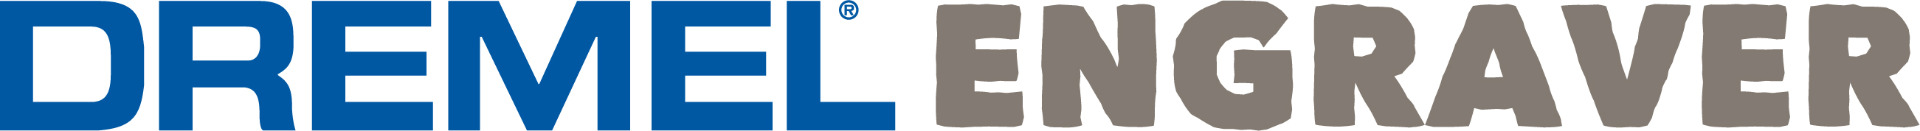 Dremel Engraver Logo